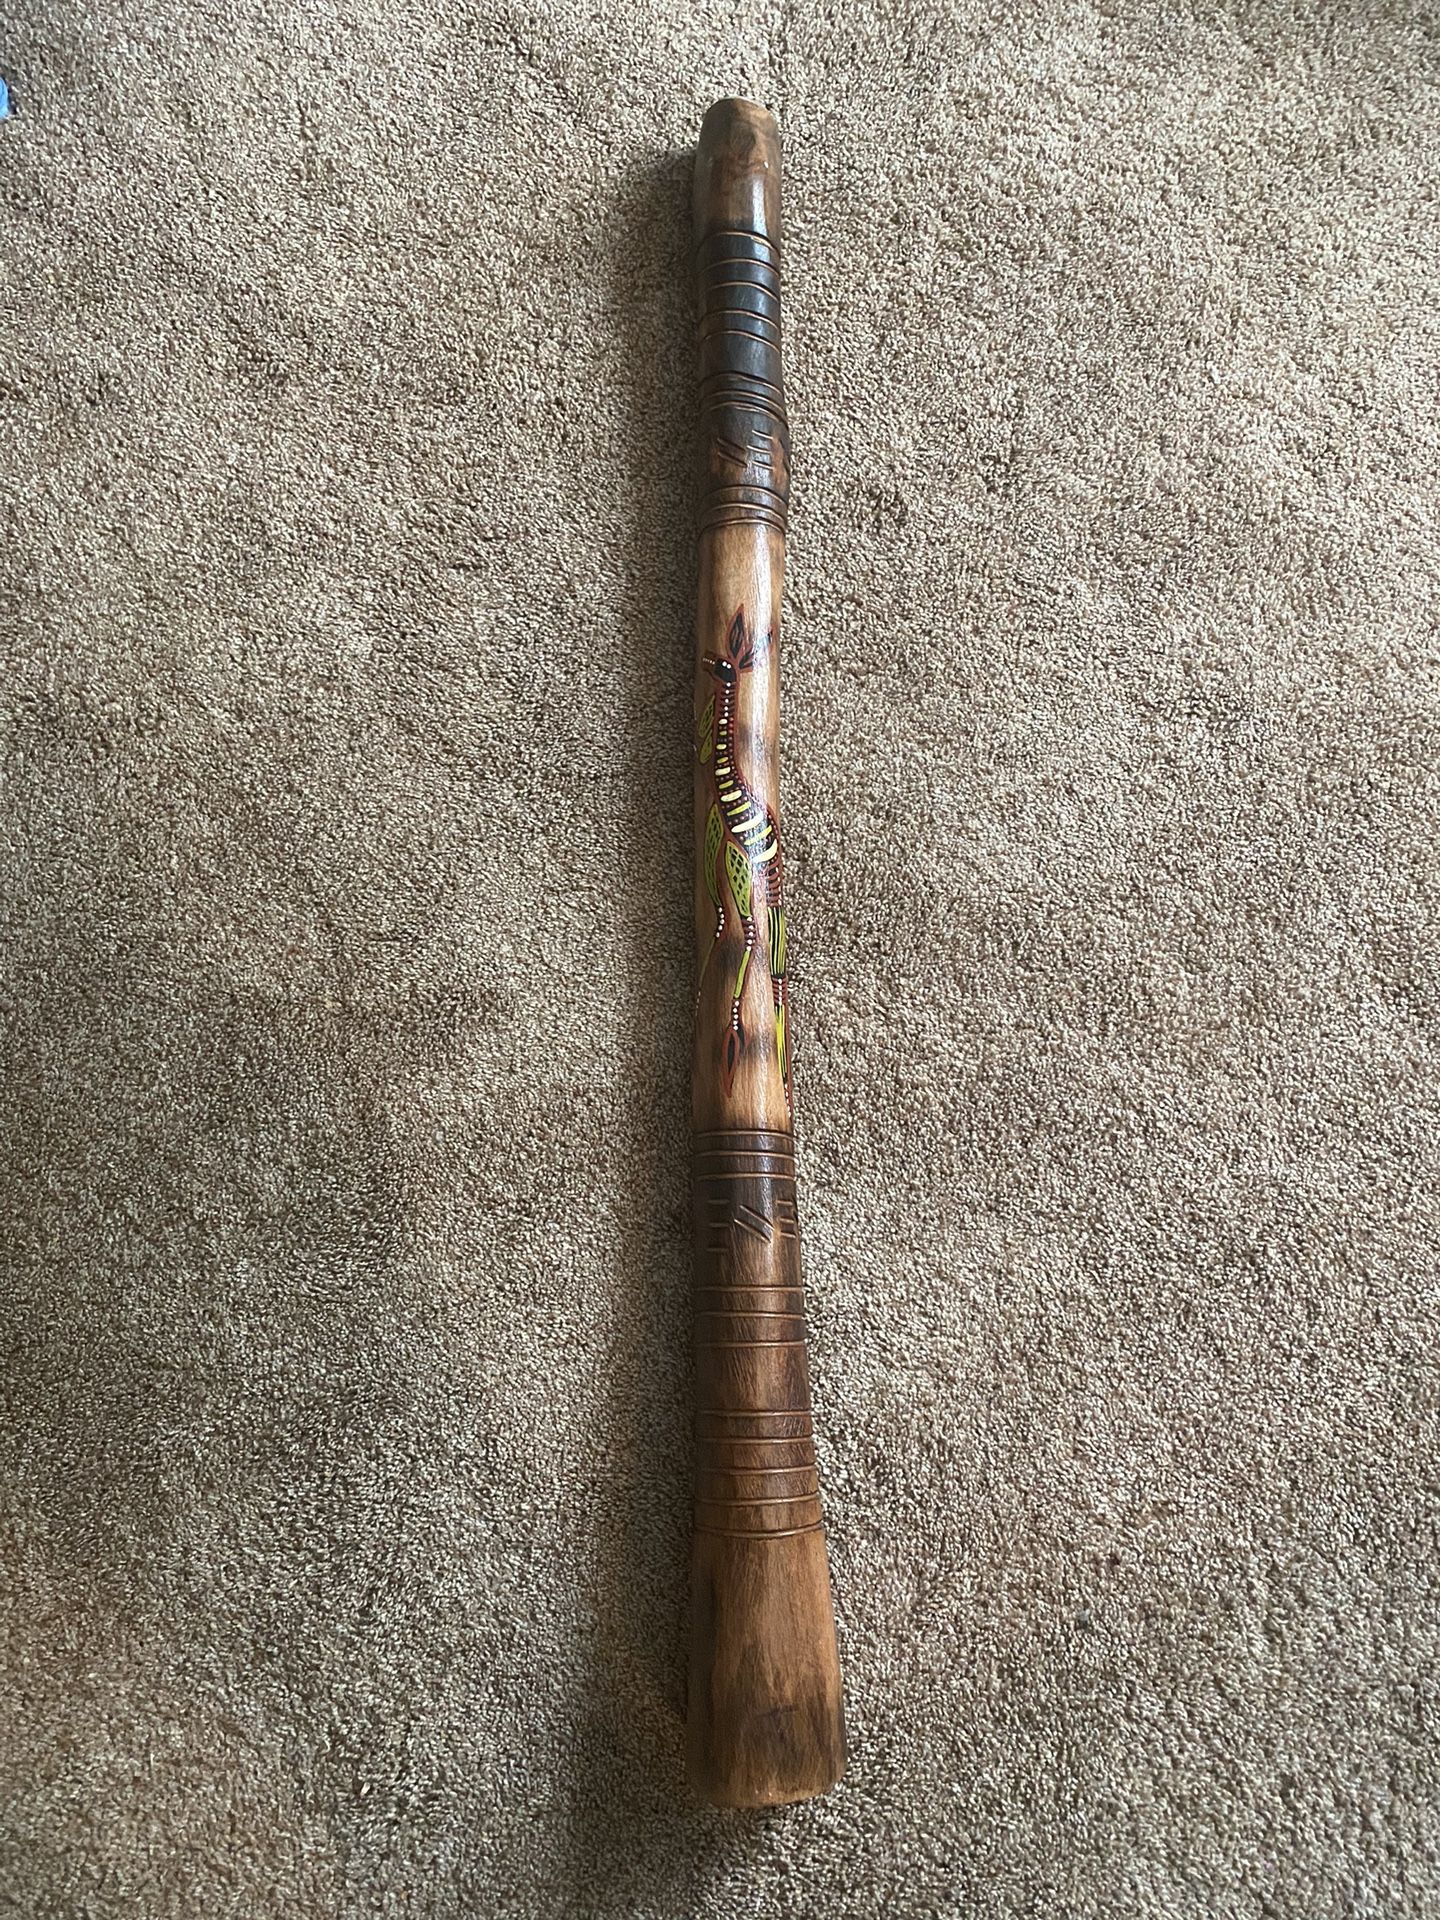 Authentic Wiradjuri Tribe didgeridoo